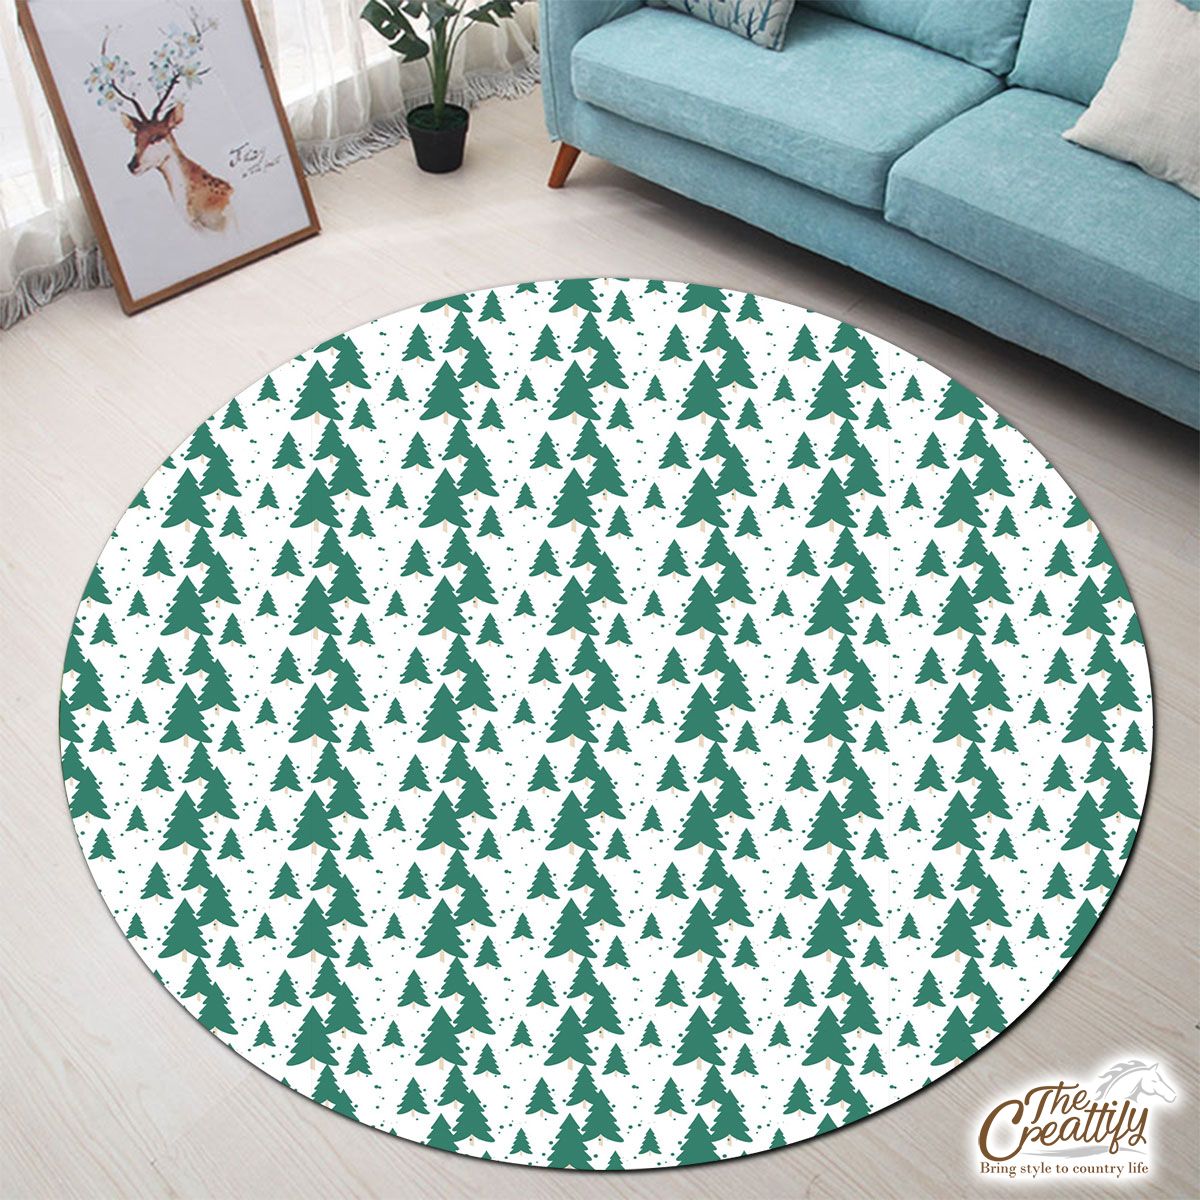 White And Green Christmas Tree Round Carpet